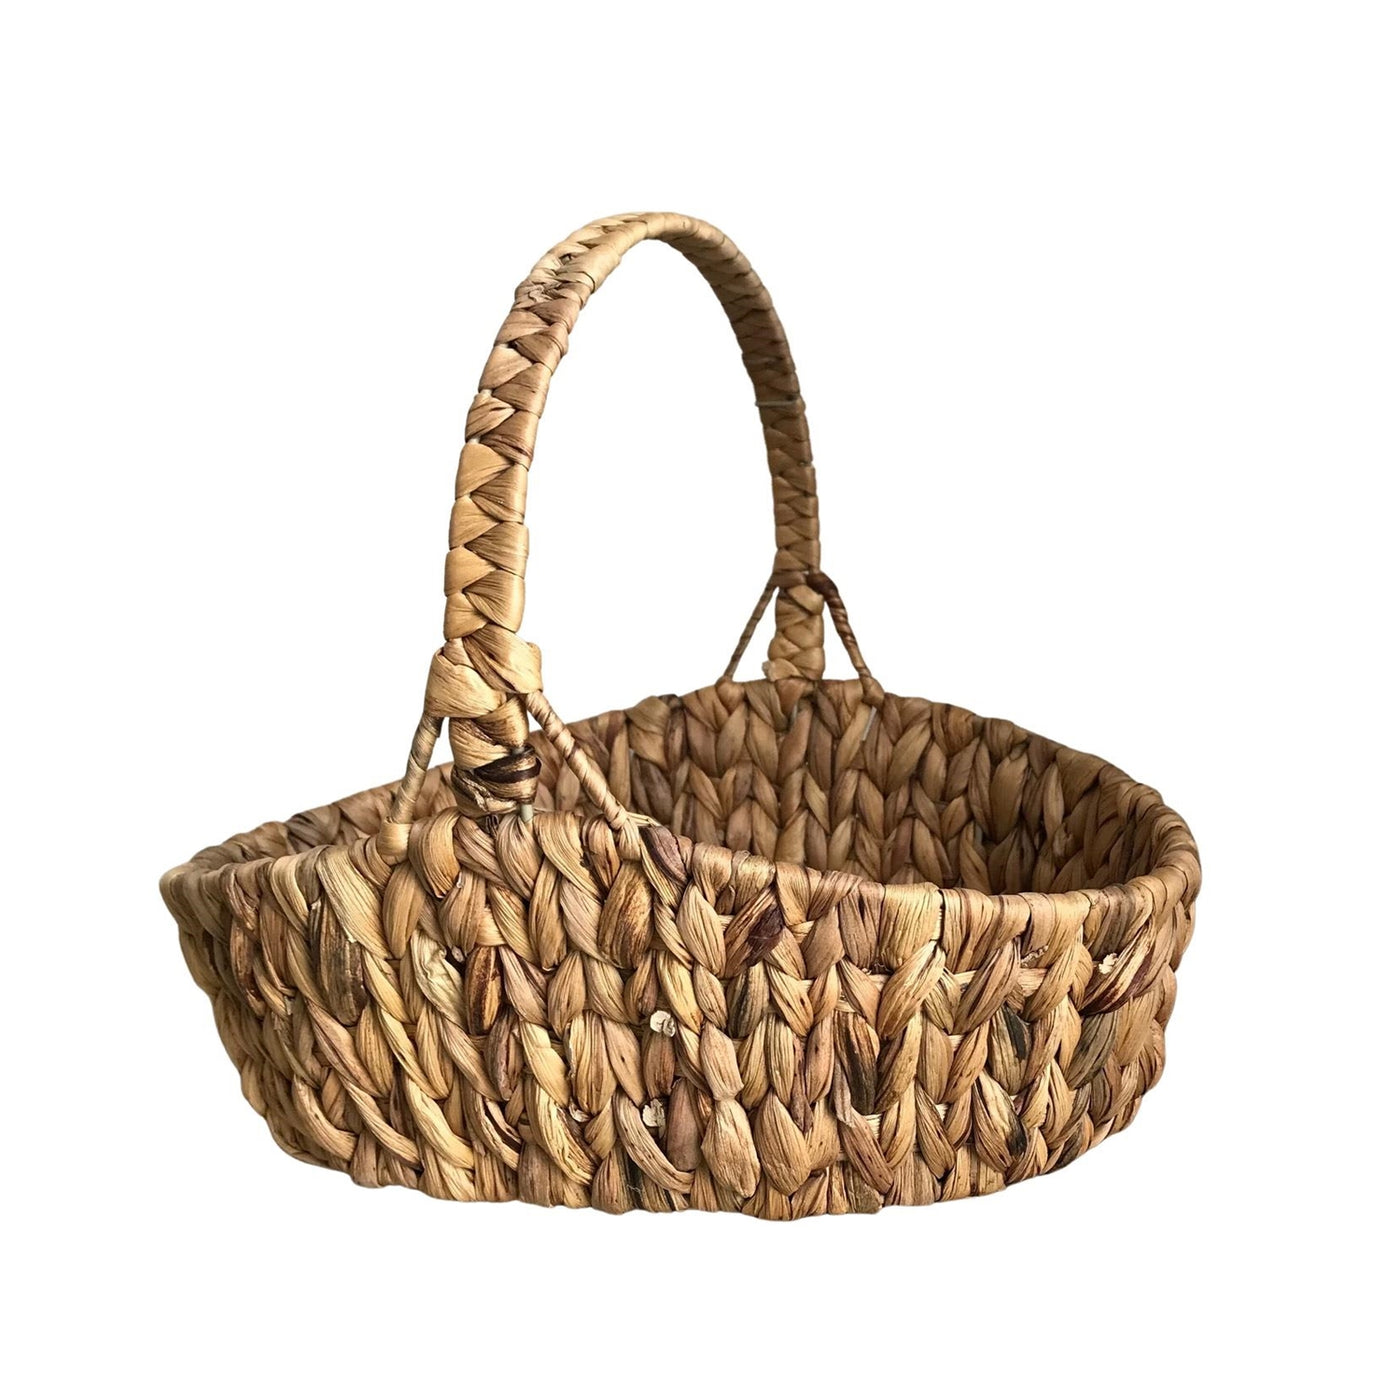 Woven Handled Baskets 15.5", 13.5", 11.5"